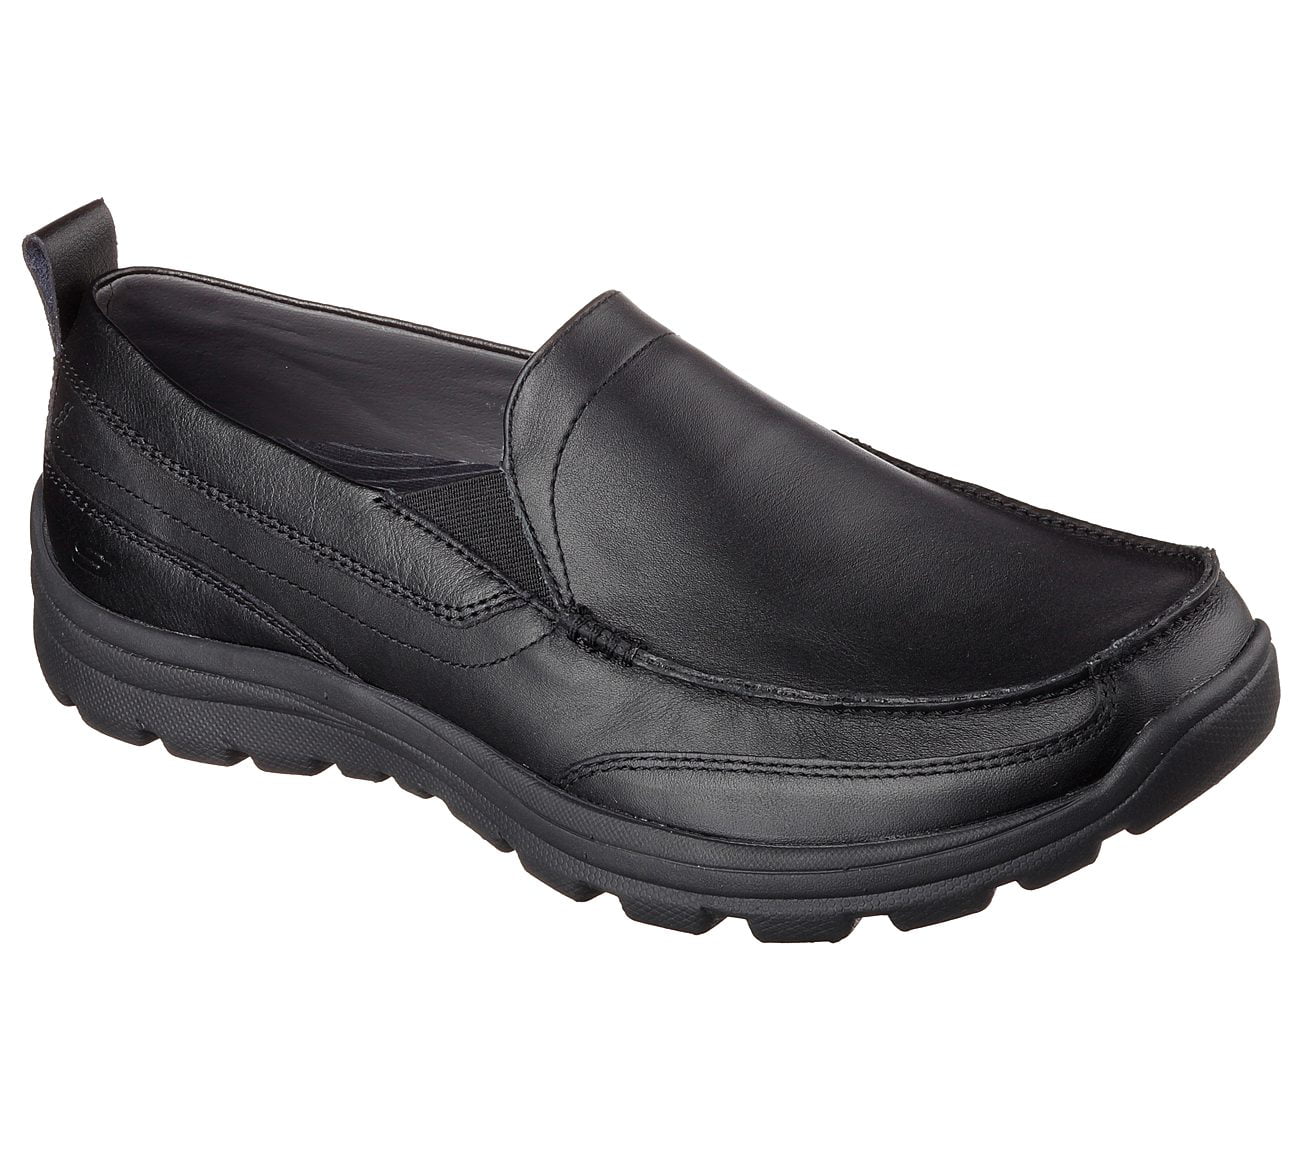 Skechers Men's Relaxed Fit Superior Gains Loafers, Black/Black, M US - Walmart.com